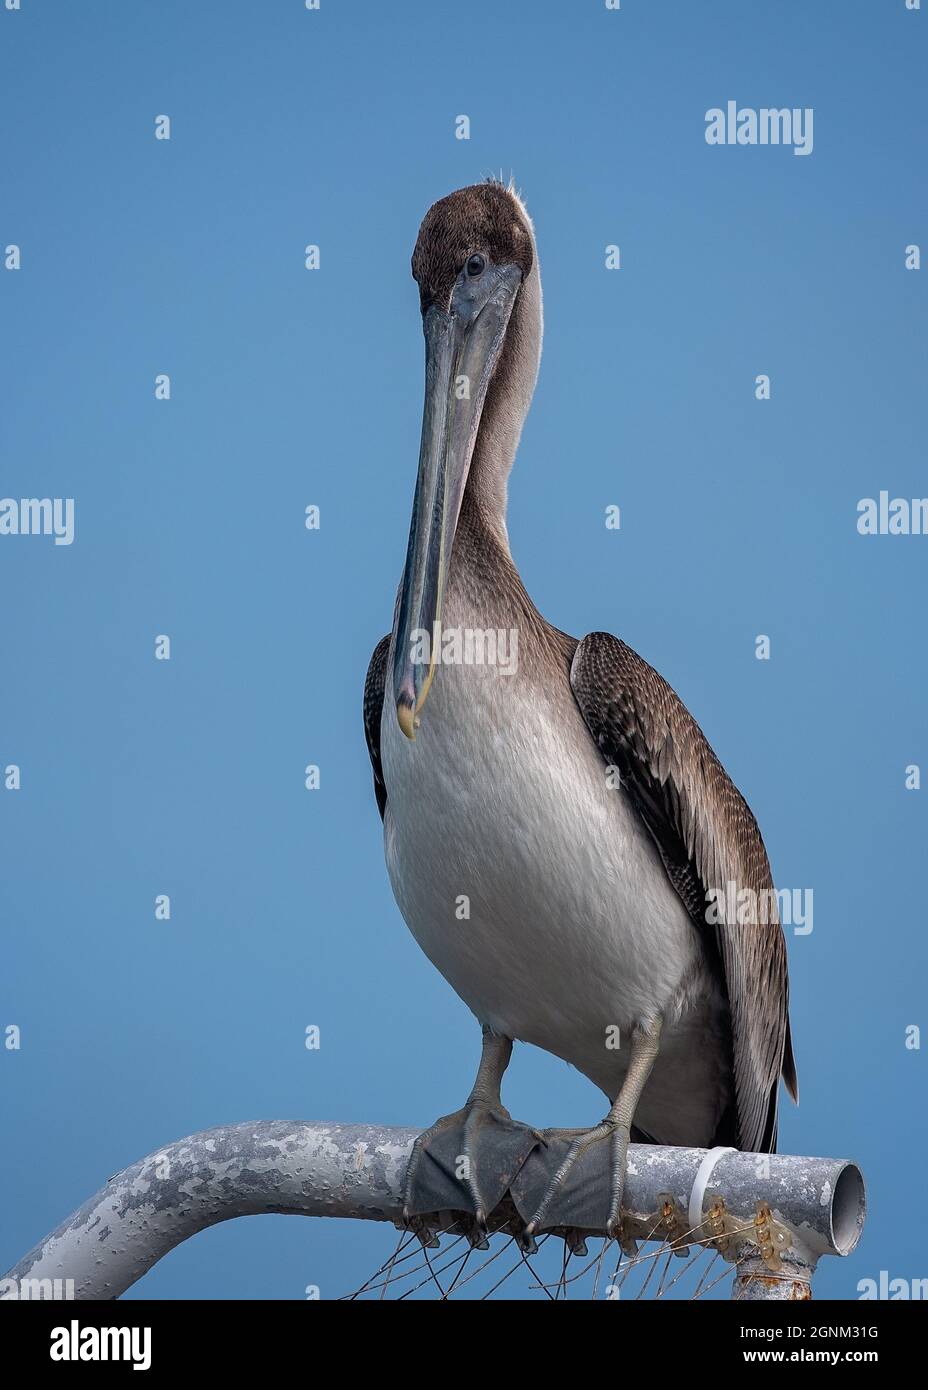 Juveniler brauner Pelikan auf dem Pfosten Stockfoto